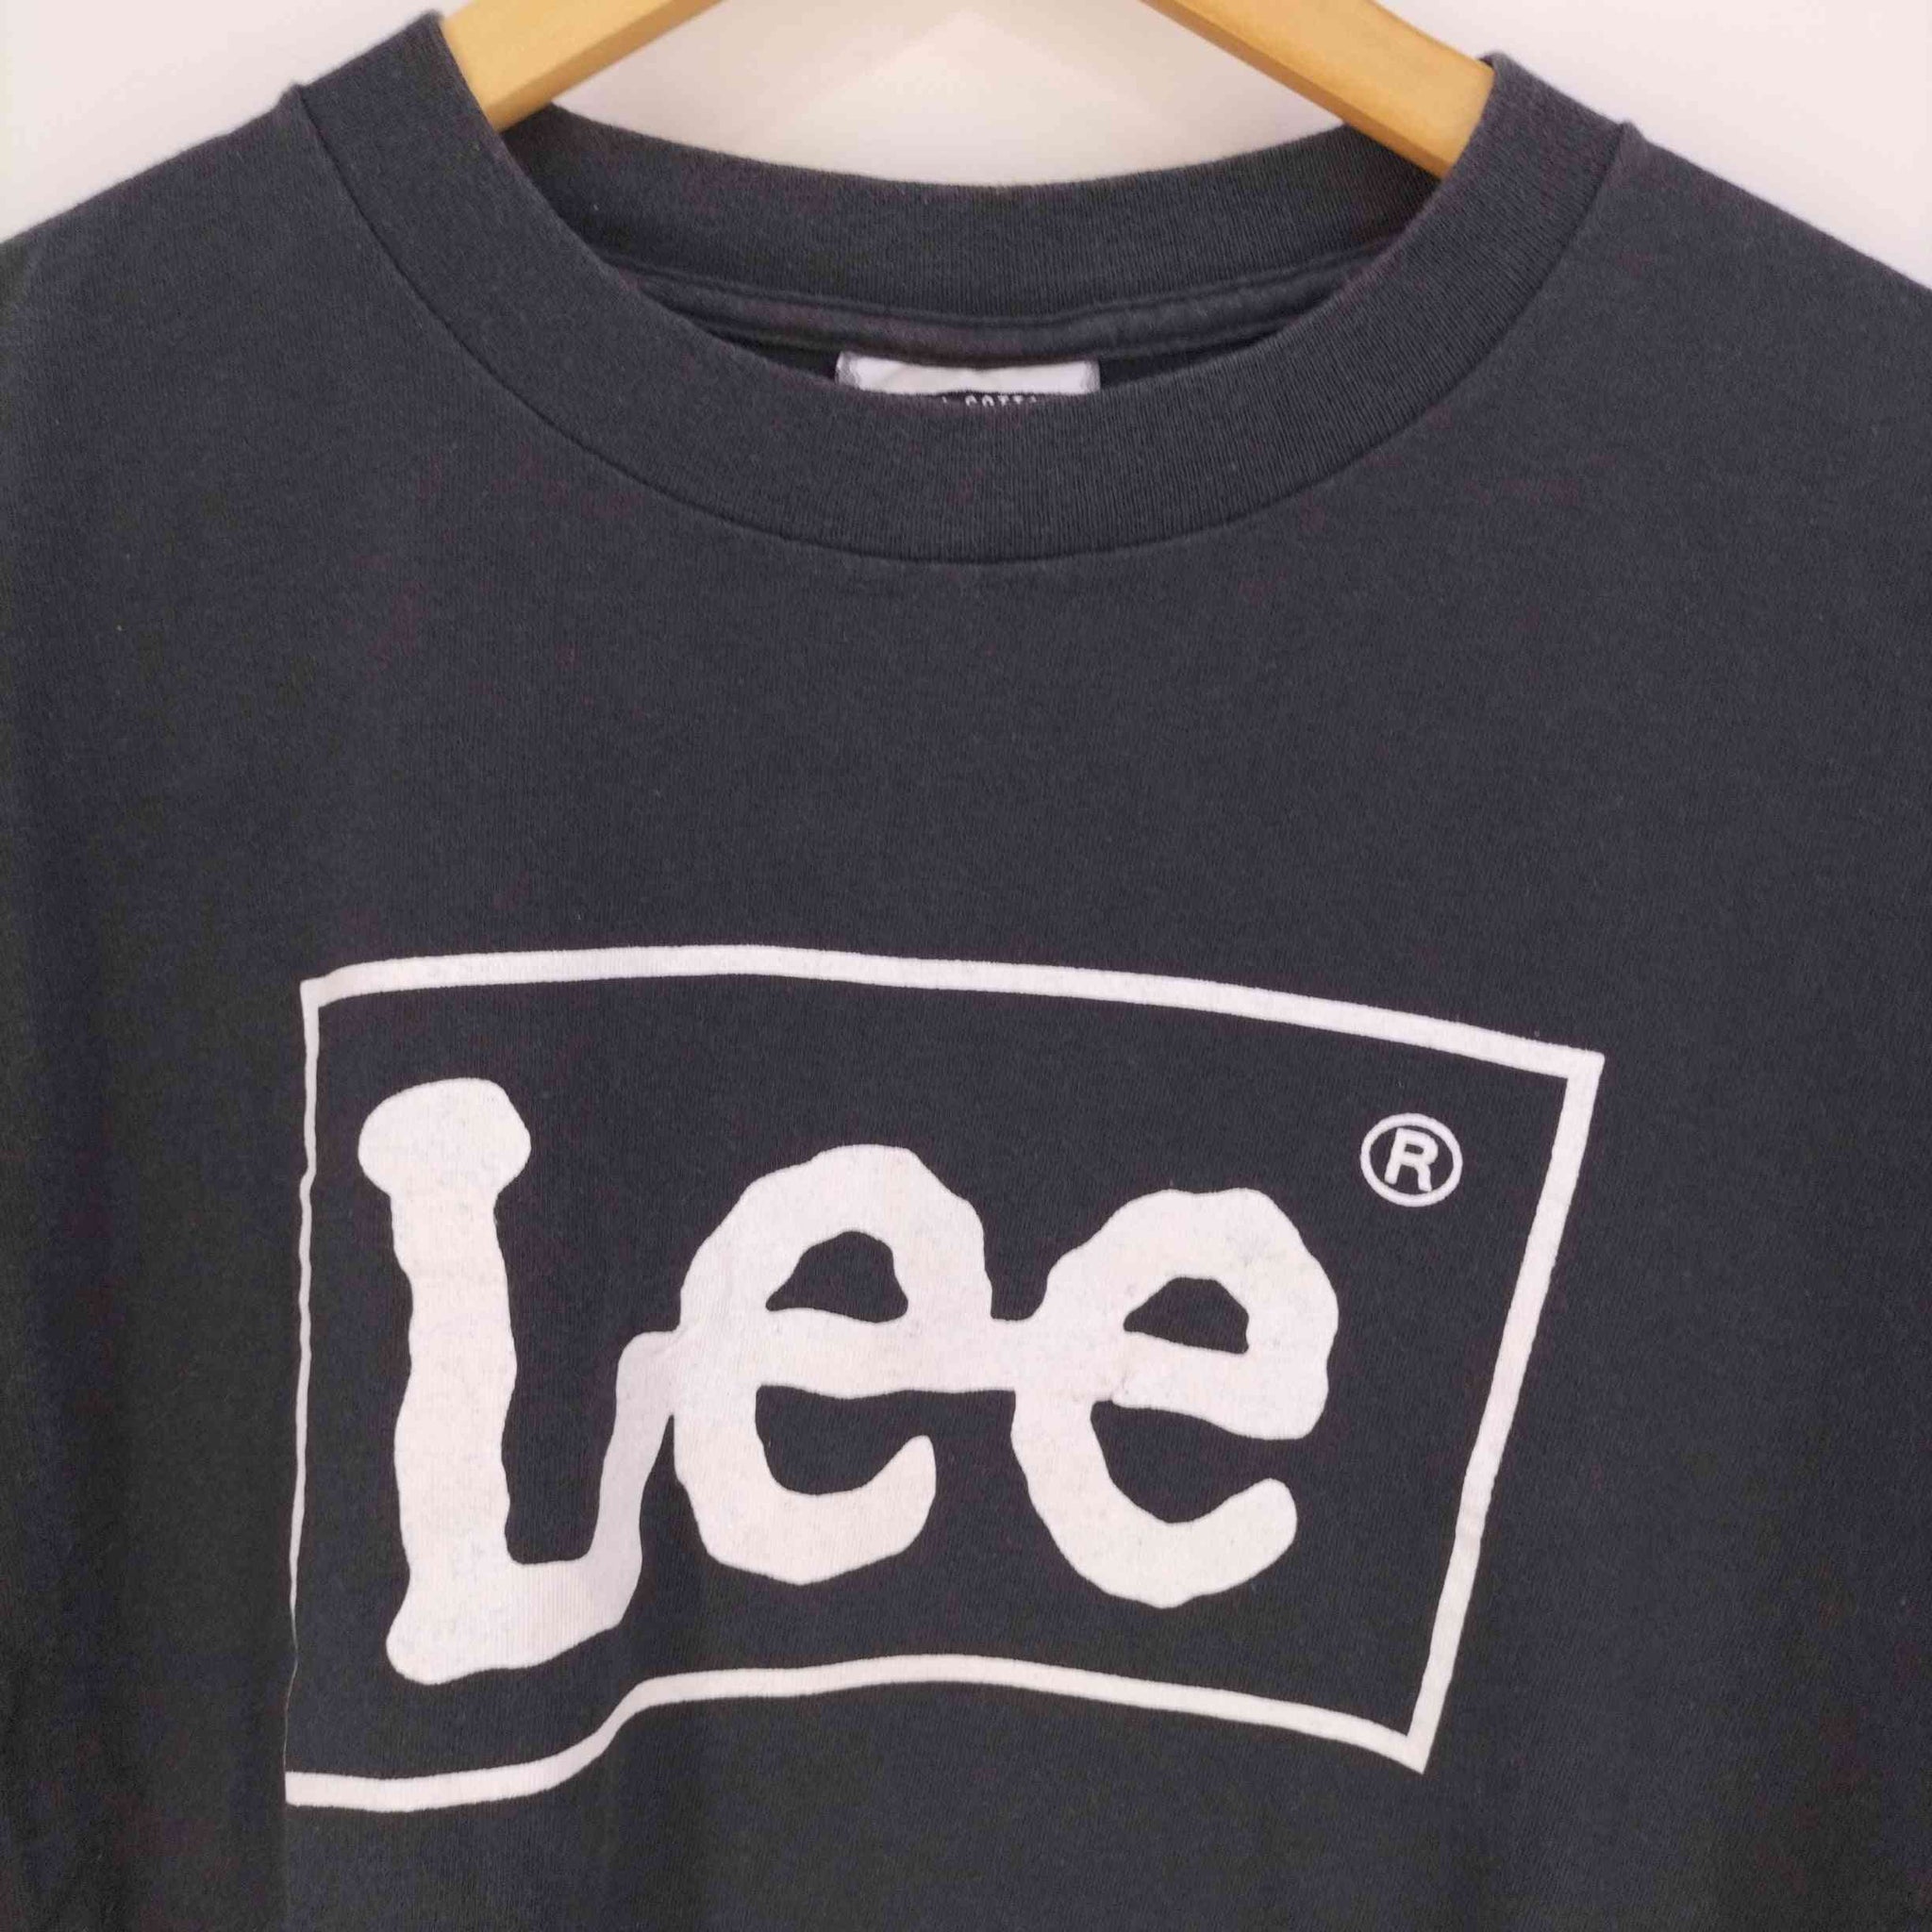 Lee(リー)USA製 TOTAL COTTON フロントロゴプリント クルーネックTシャツ